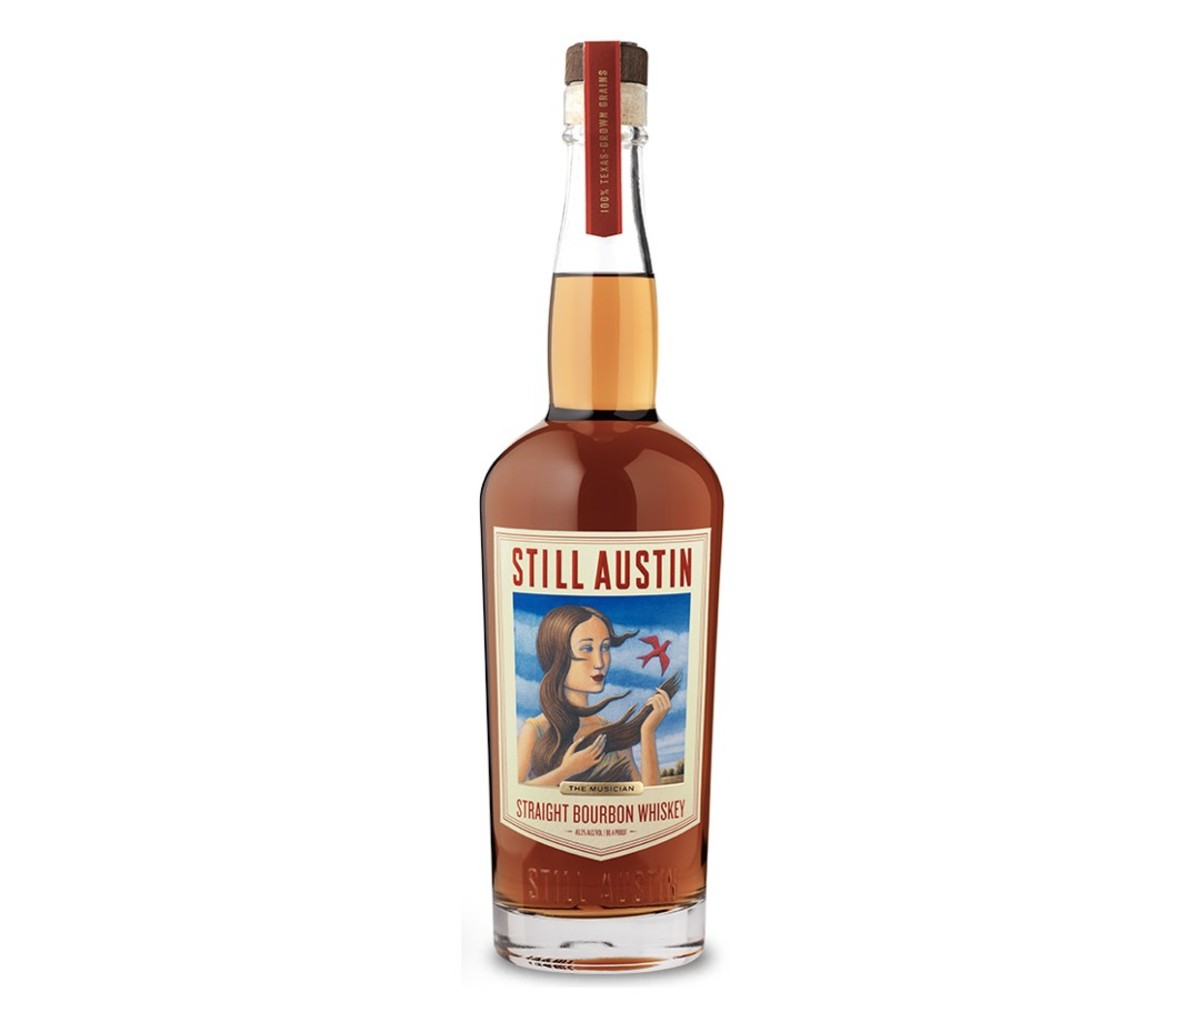 A bottle of Still Austin The Musician Straight Bourbon Whiskey